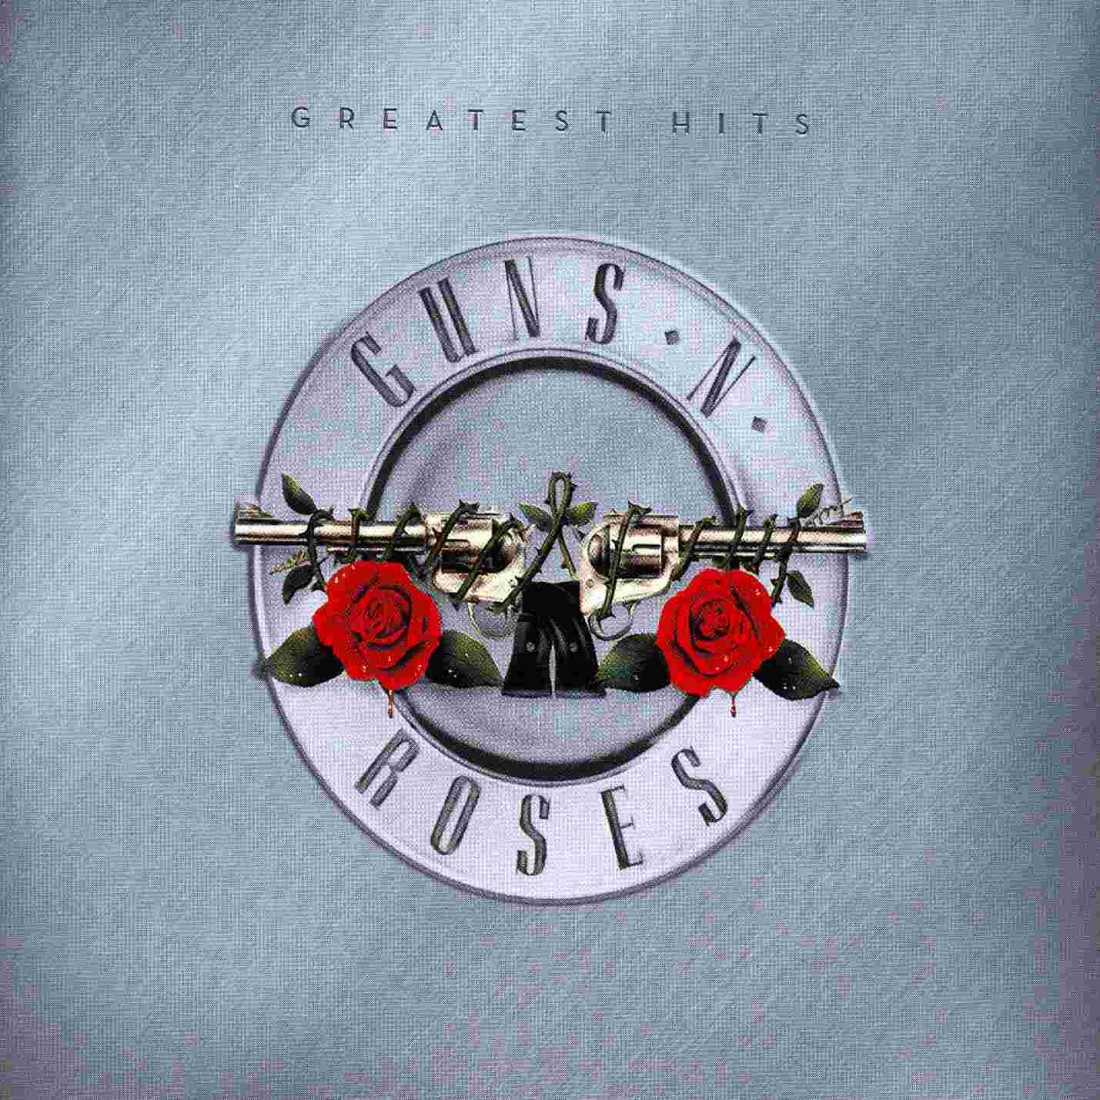 [Guns N Roses] Patience Photo-Image